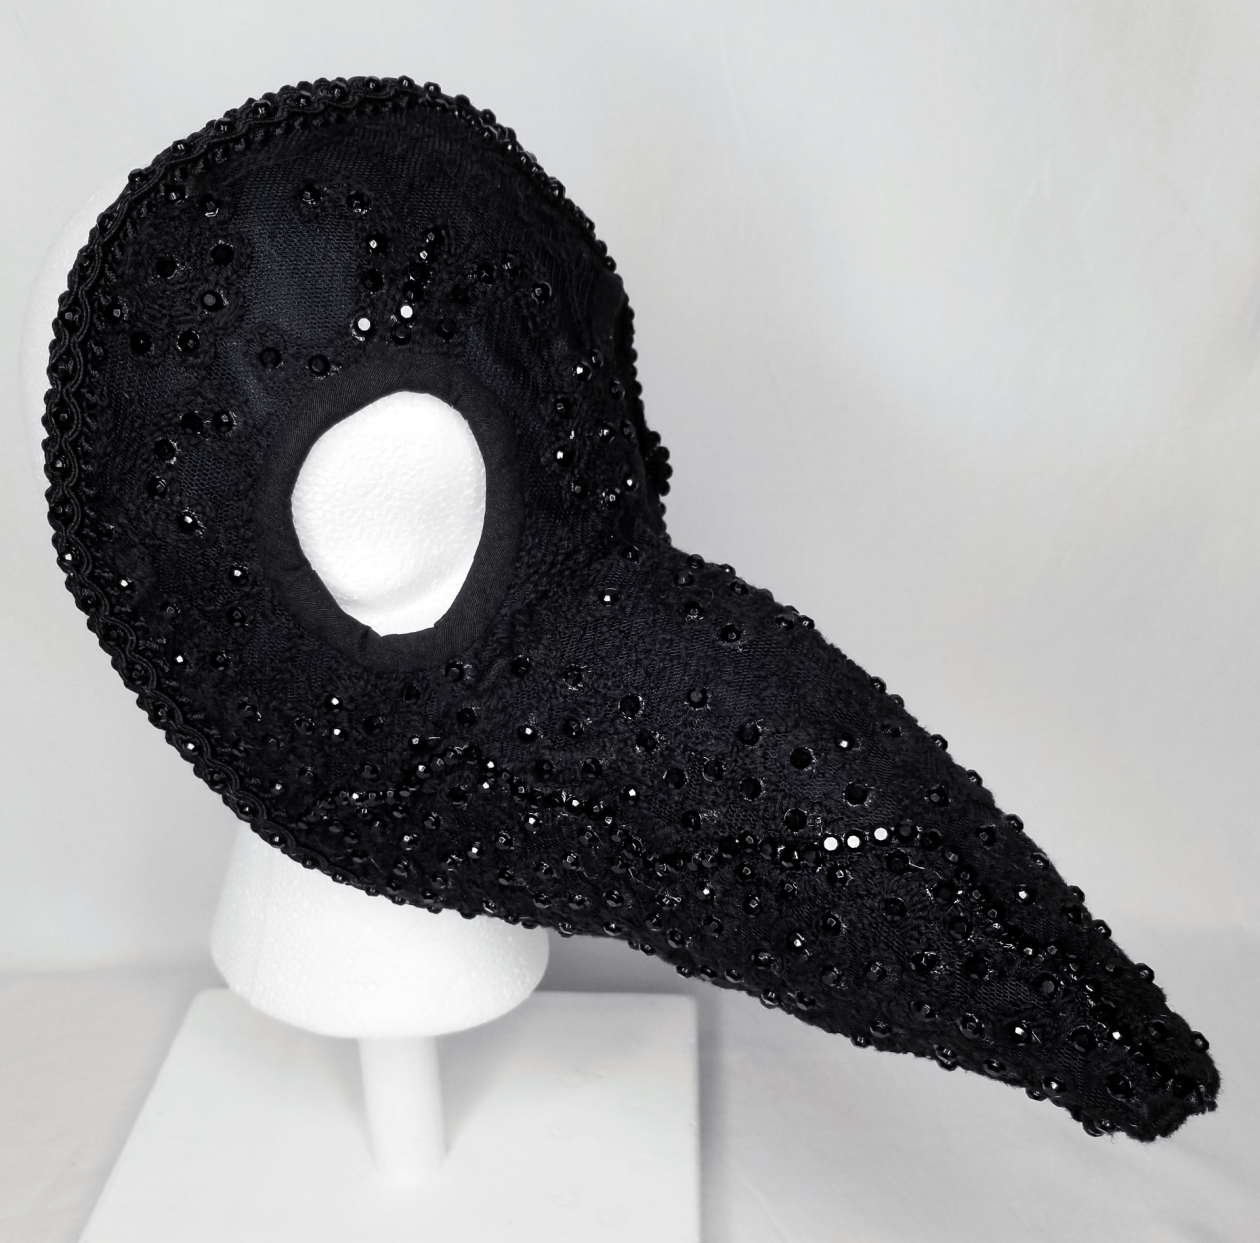 A black embellished beaked mask